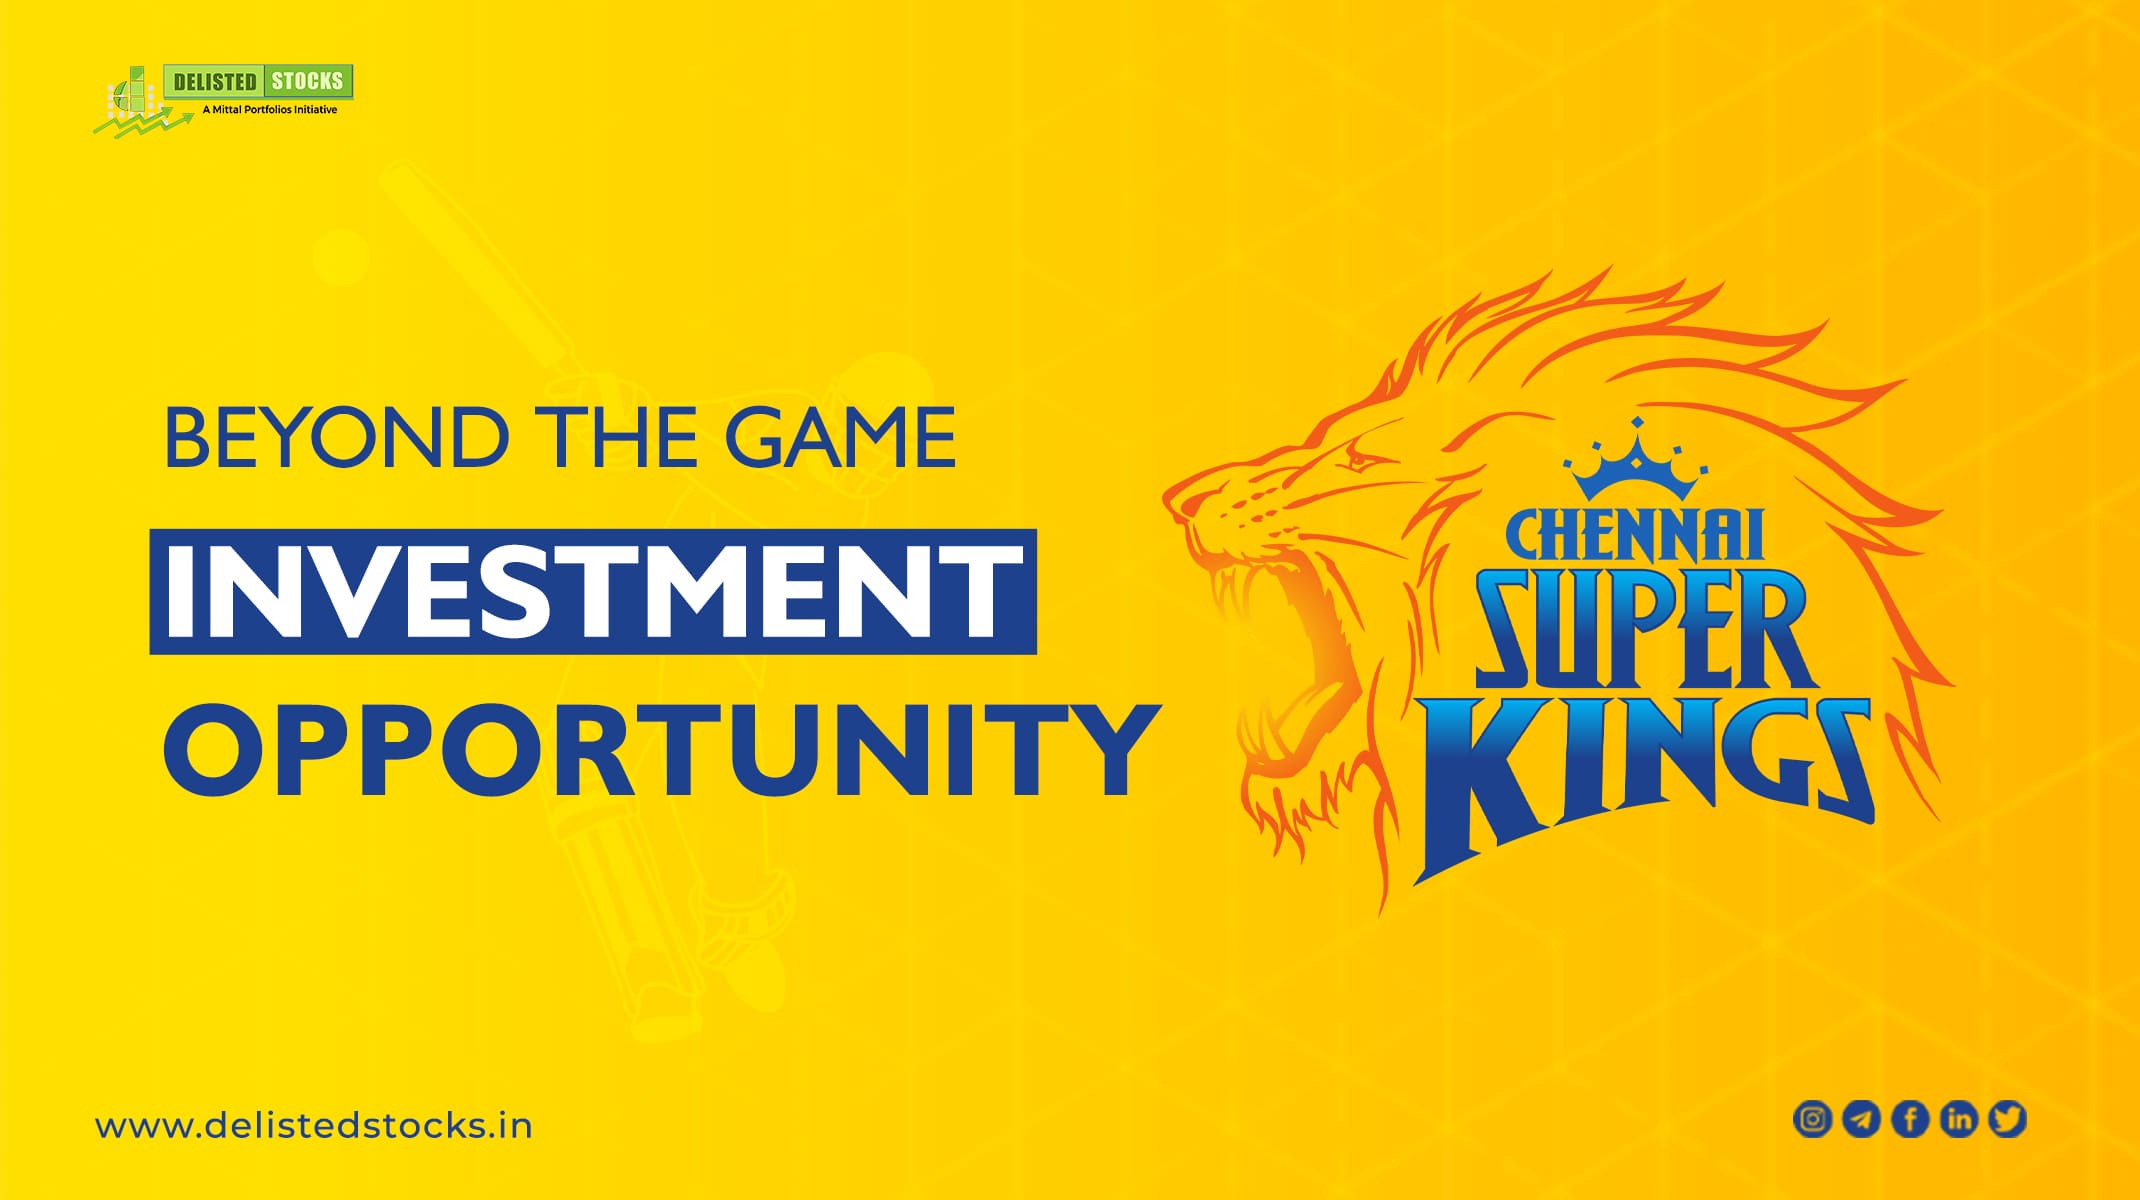 Chennai super kings unlisted share, CSK unlisted share, invest in CSK, Invest in chennai supper kings , CSK blog